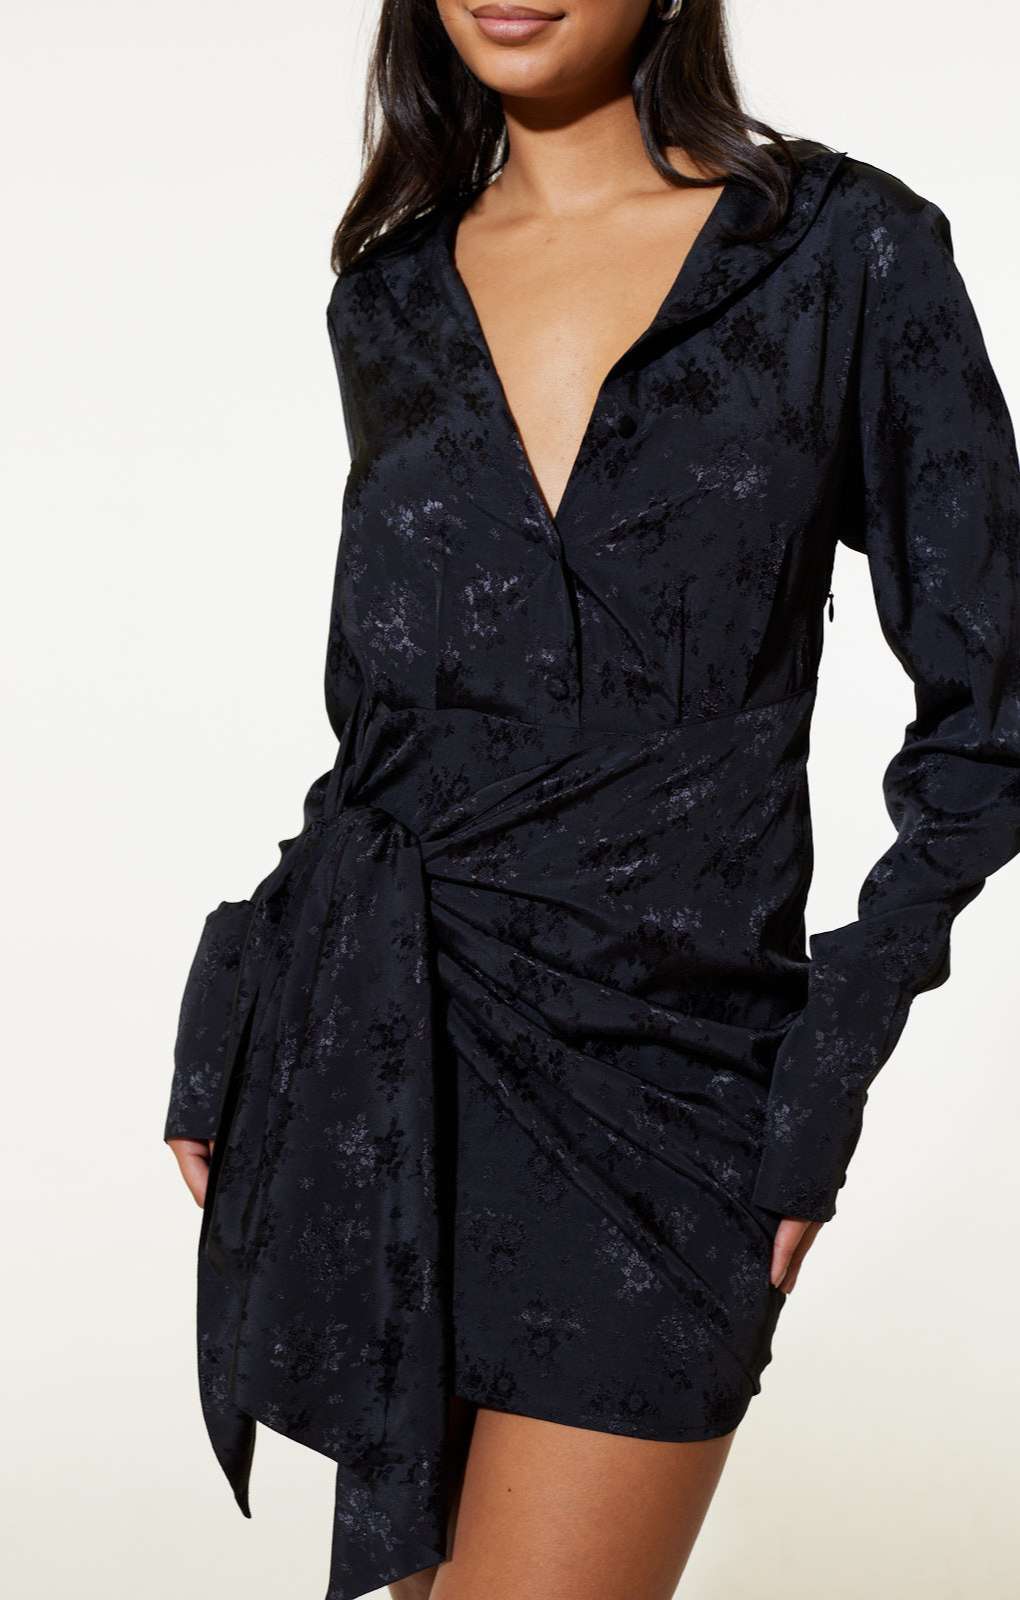 Samsara Gabriella Shirt Dress in Black product image